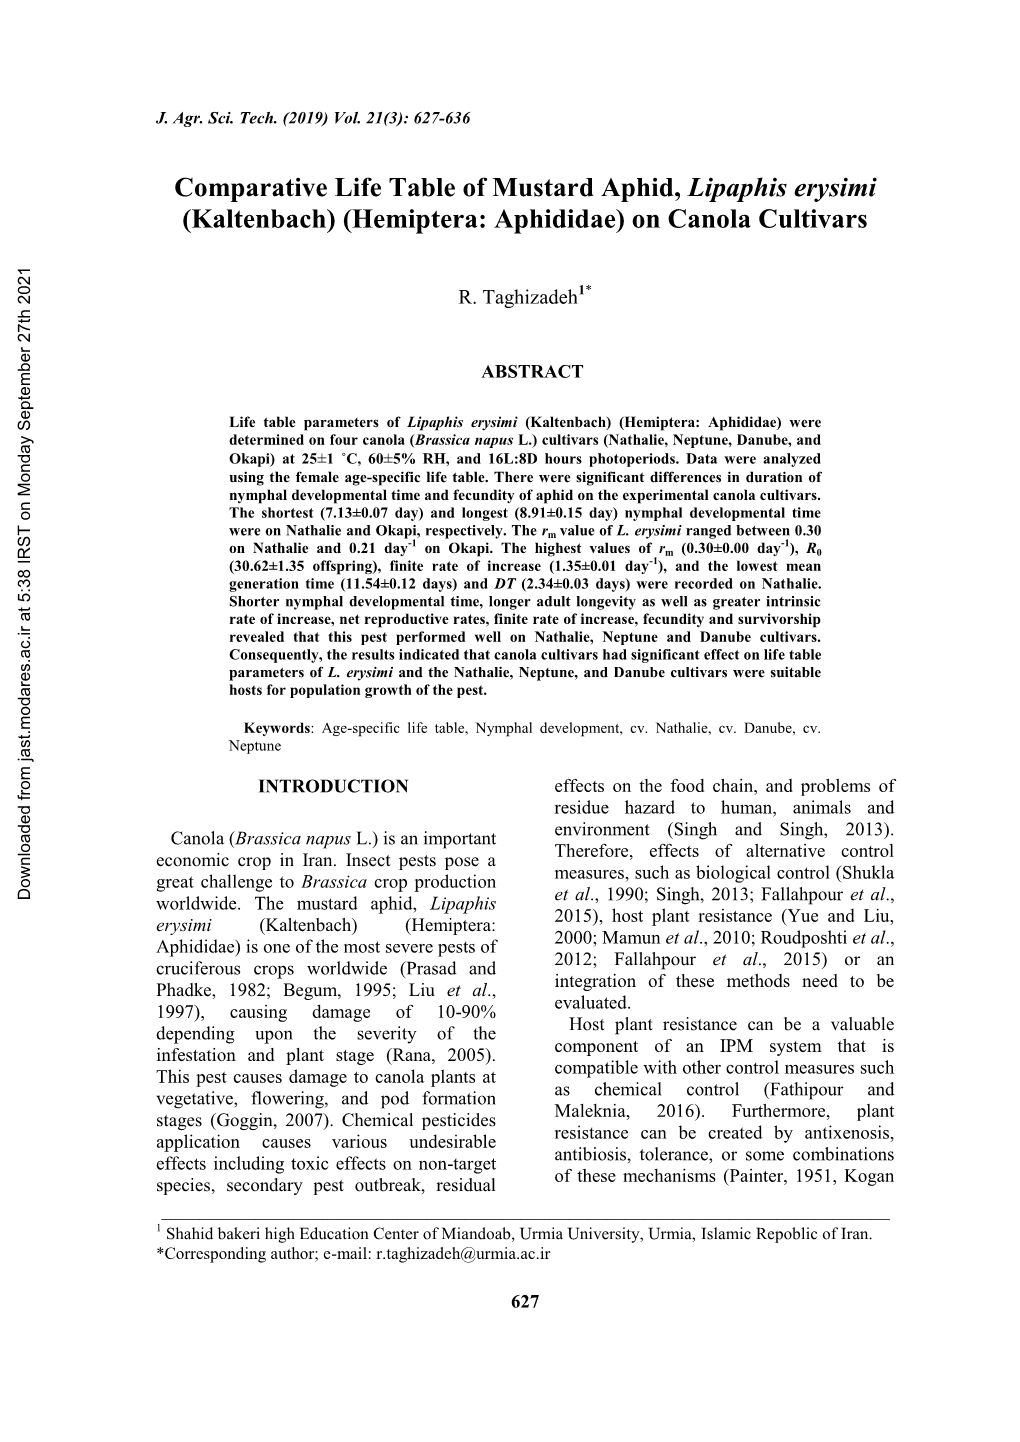 Comparative Life Table of Mustard Aphid, Lipaphis Erysimi (Kaltenbach) (Hemiptera: Aphididae) on Canola Cultivars